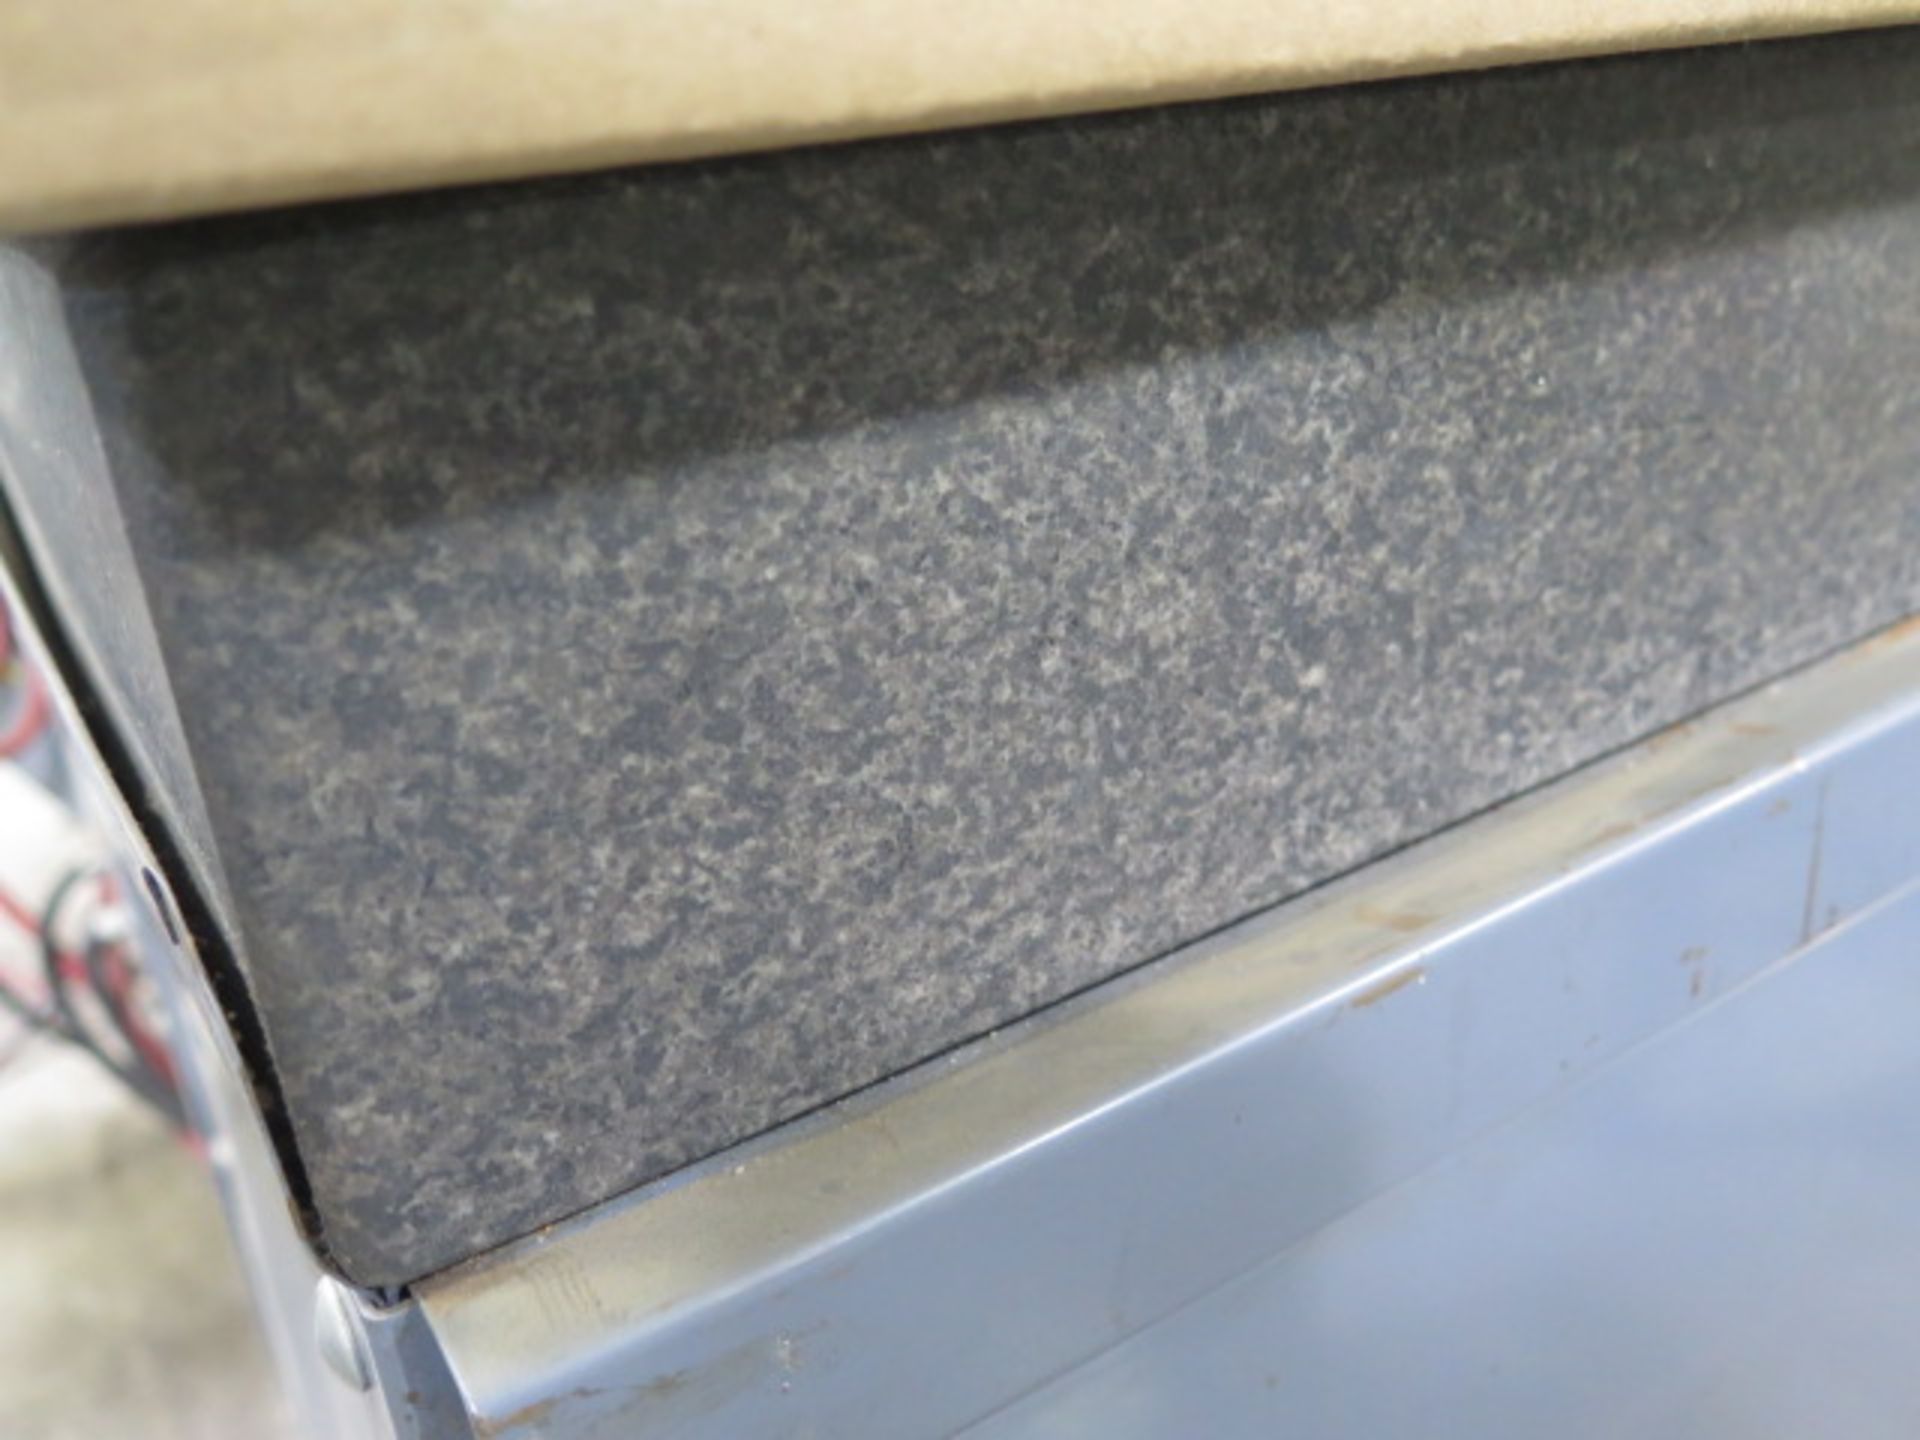 Standridge 24" x 36" x 4" Granite Surface Plate w/ Cabinet Base - Image 2 of 3